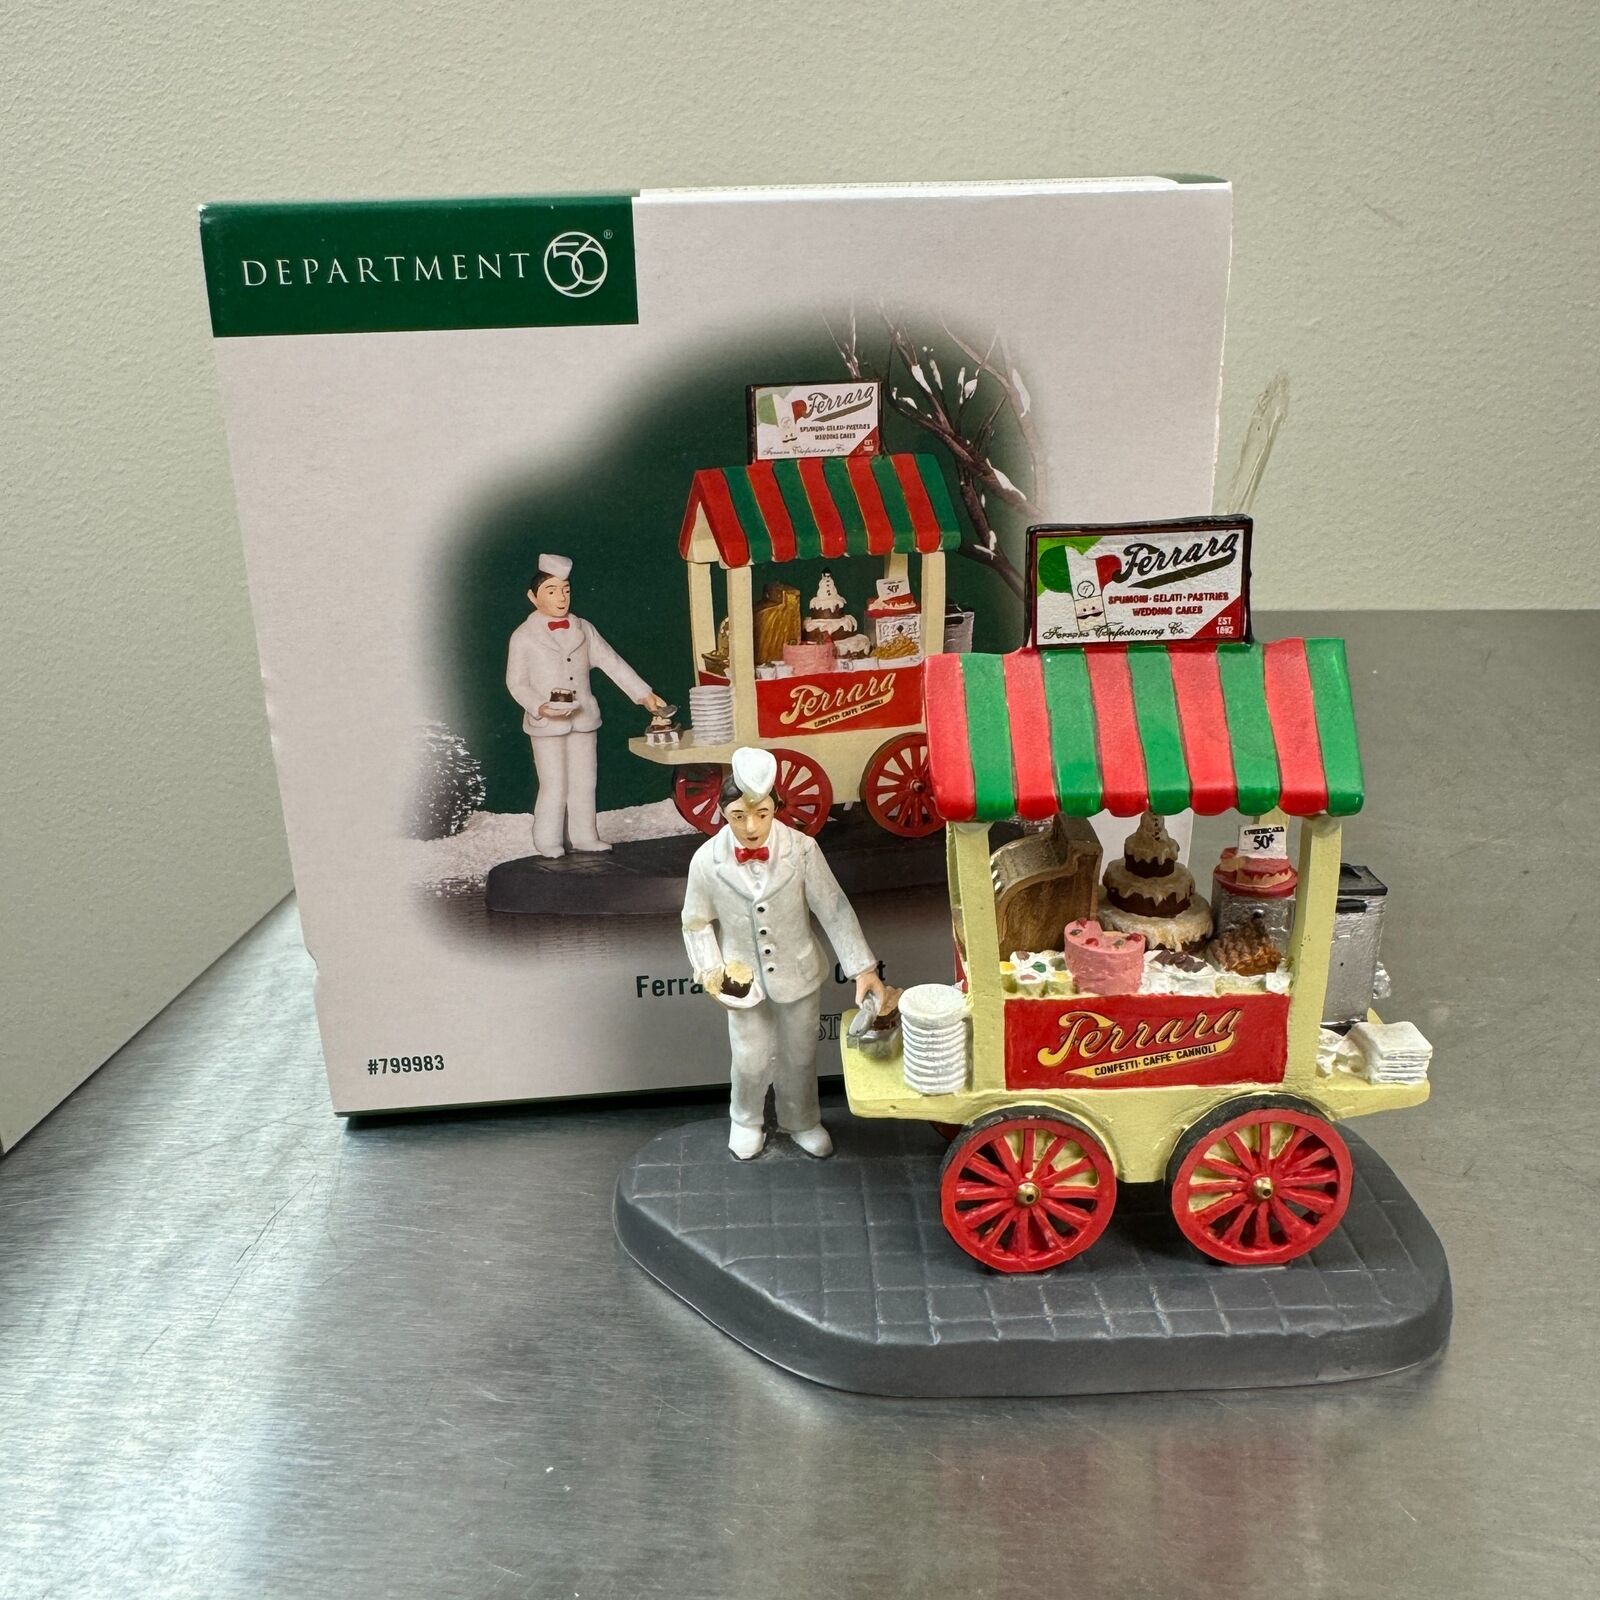 Department 56 - FERRARA BAKERY CART - #799983 Christmas in the City Figurine